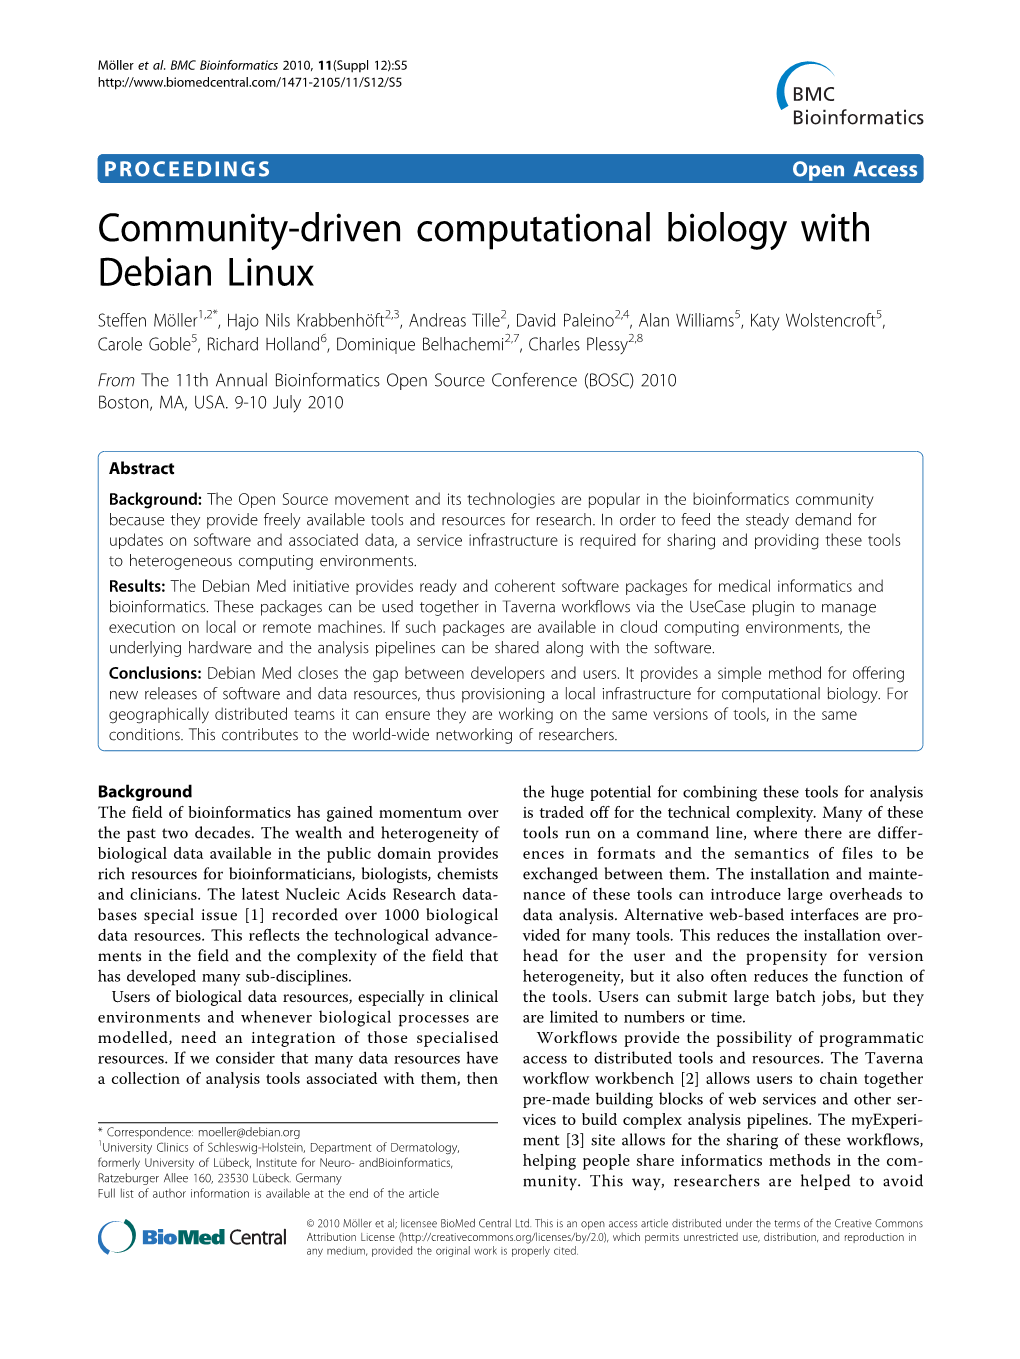 Community-Driven Computational Biology with Debian Linux